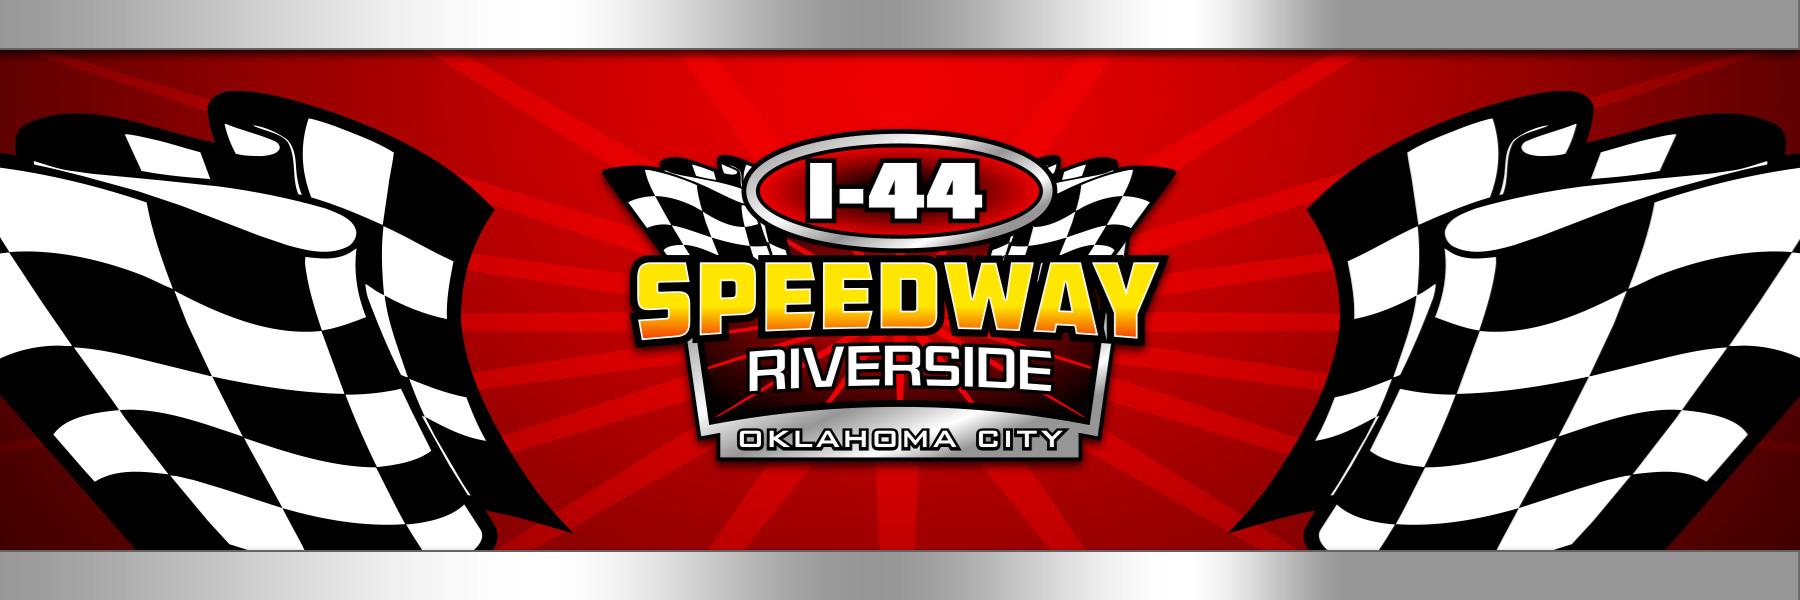 3/27/2021 - I-44 Riverside Speedway